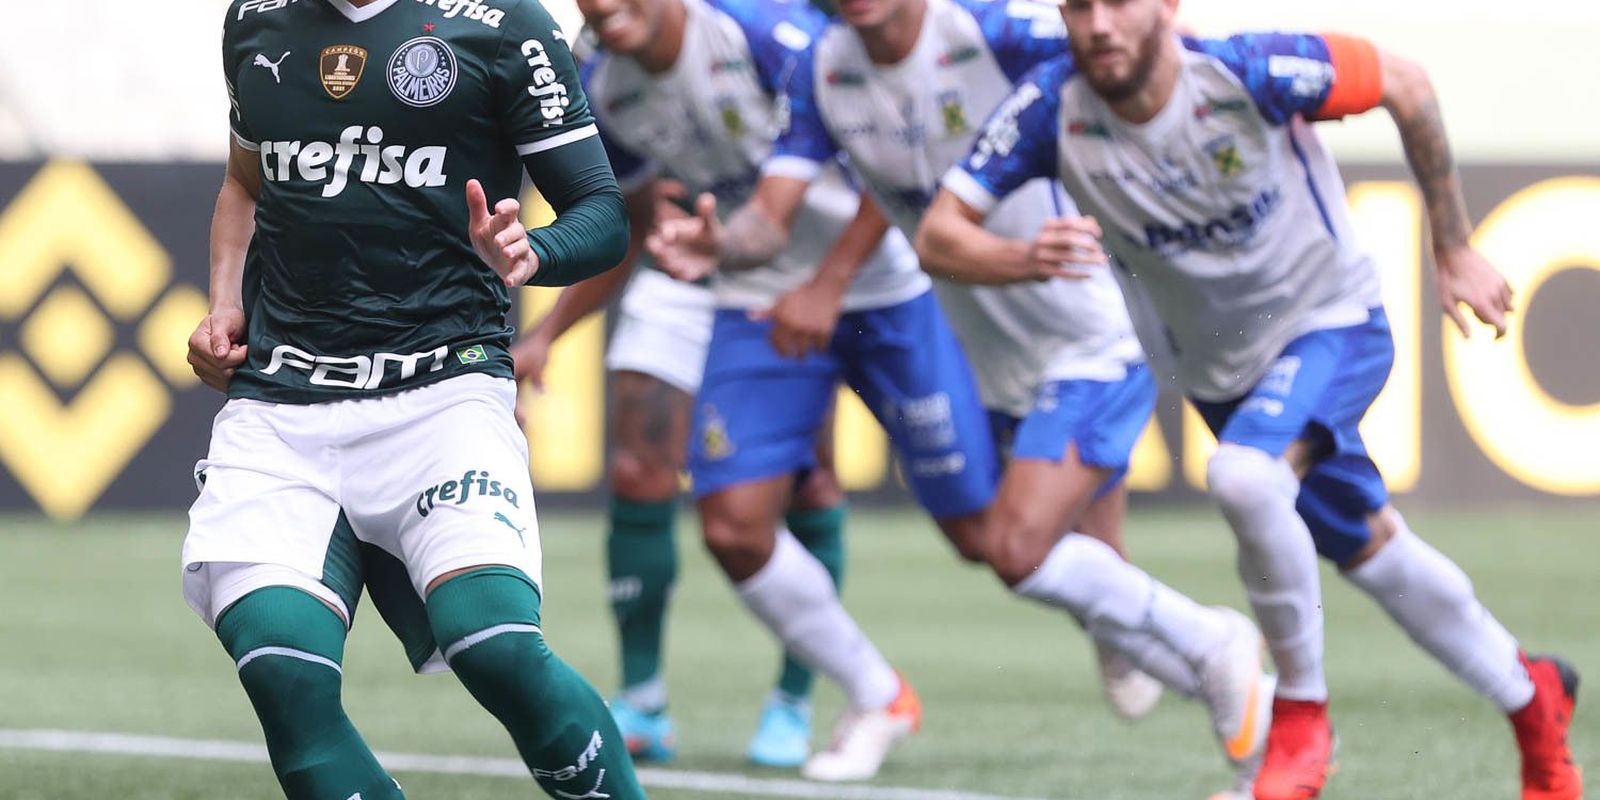 Paulistão: Palmeiras beats Santo André and isolates itself as leader of Group C